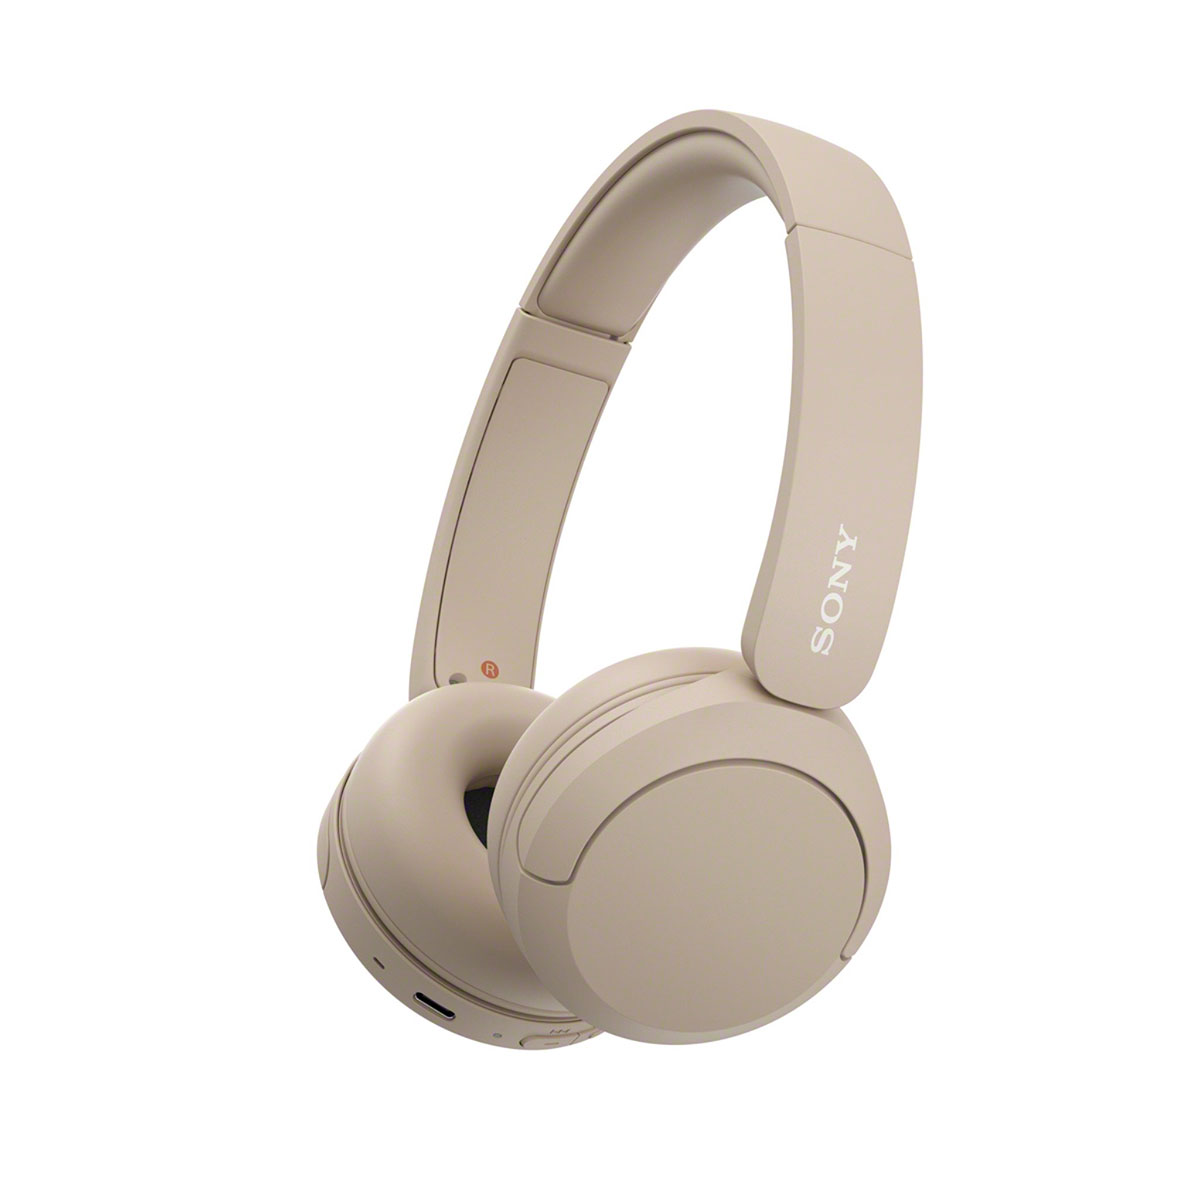 Sony - Wireless Headphones Bluetooth On-Ear Headset with Microphone, Cream